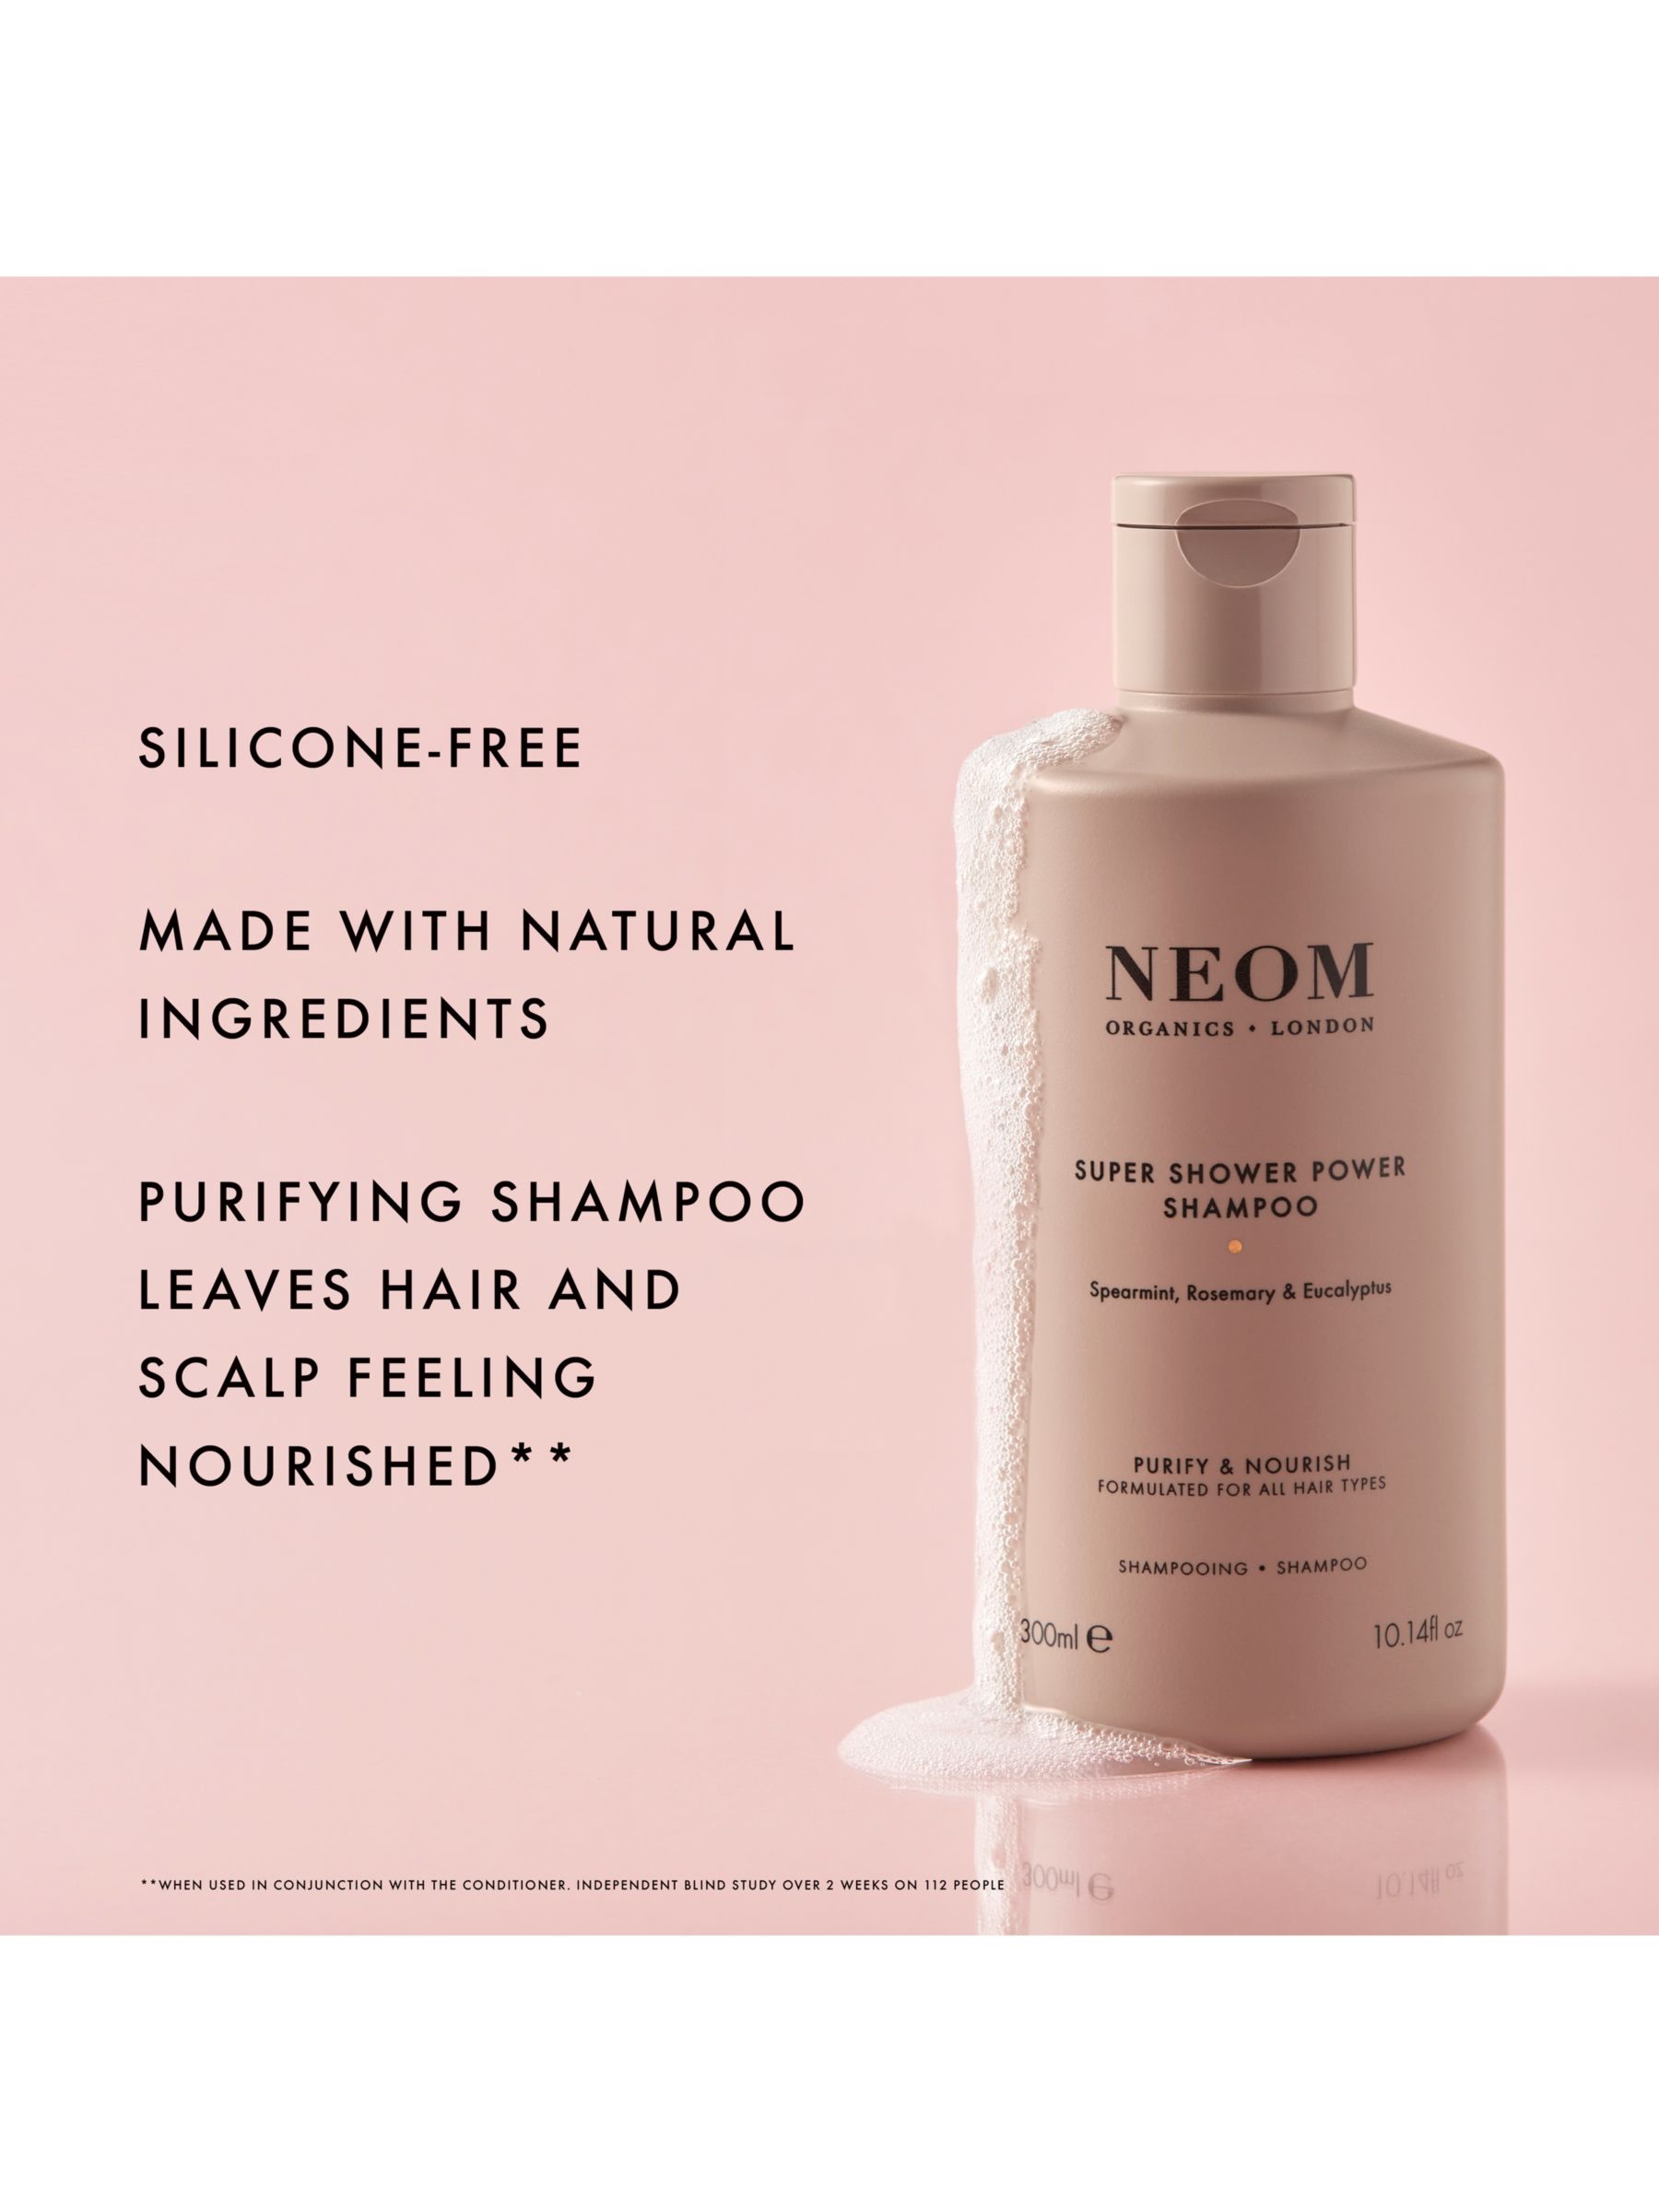 Neom Organics London Super Shower Power Shampoo, 300ml 2